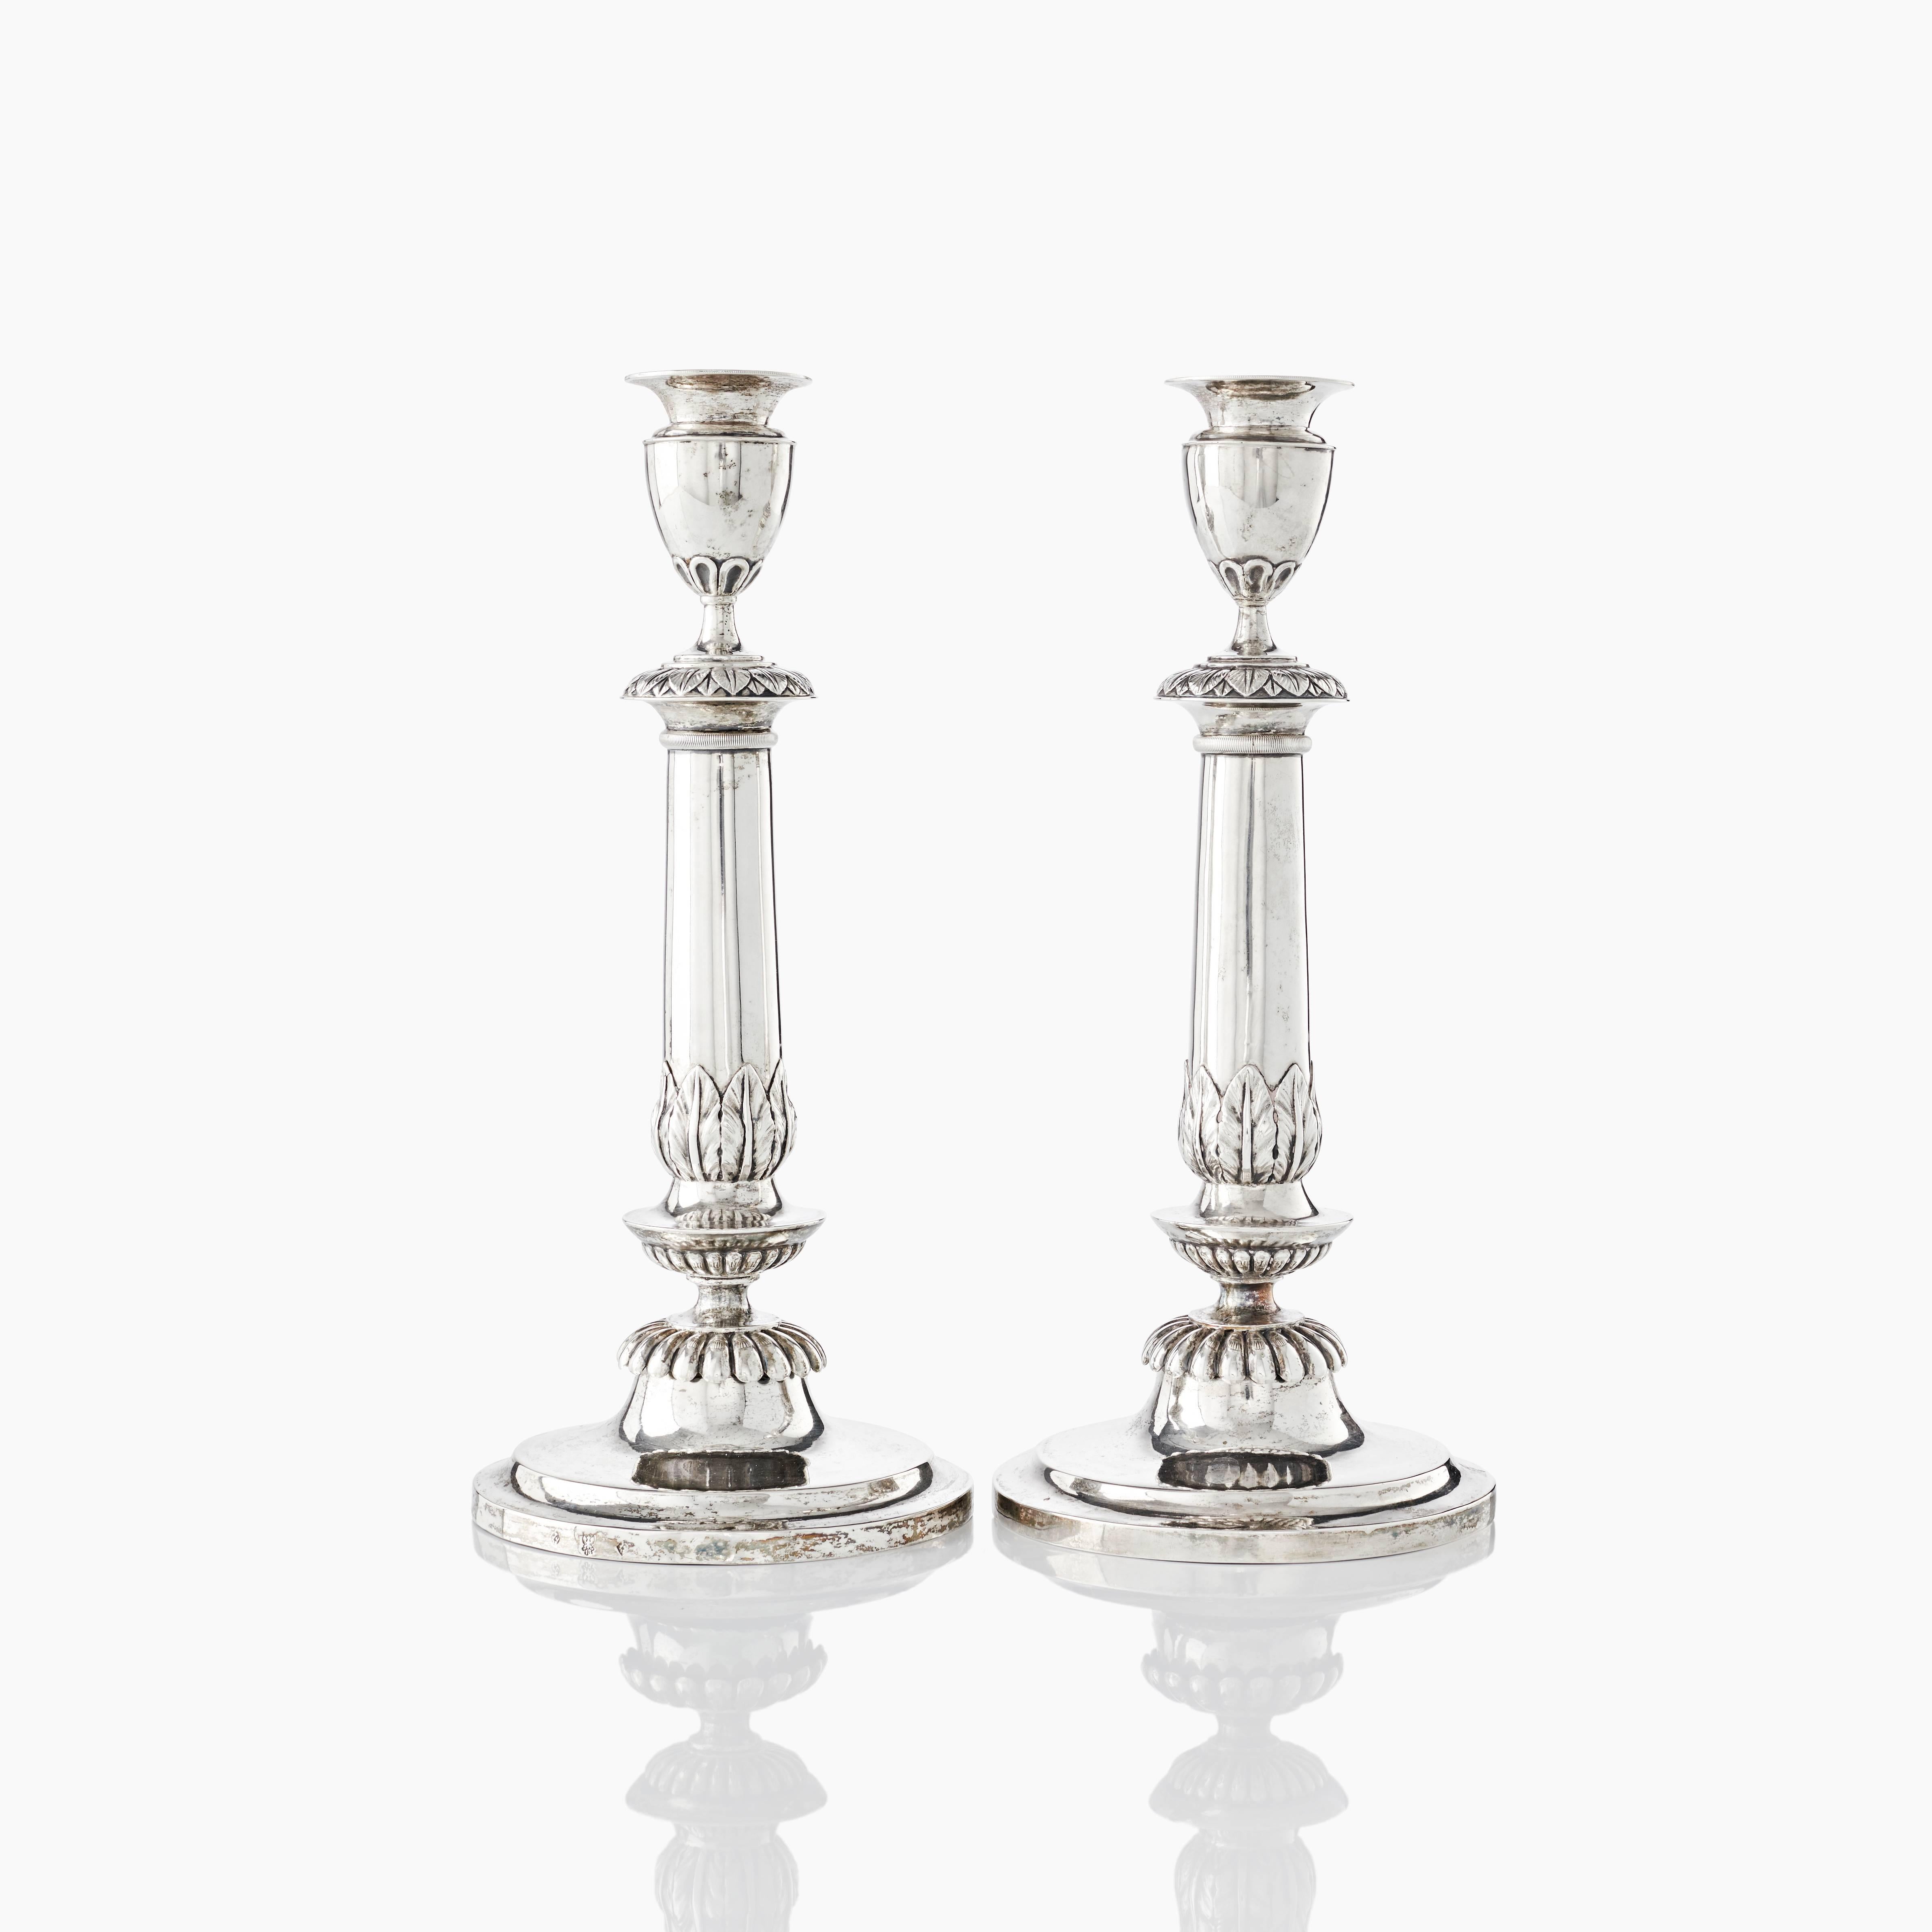 Pair of silver candlesticks by Peter Frantz Vigelius, Frankfurt am Main, circa 1800.
 